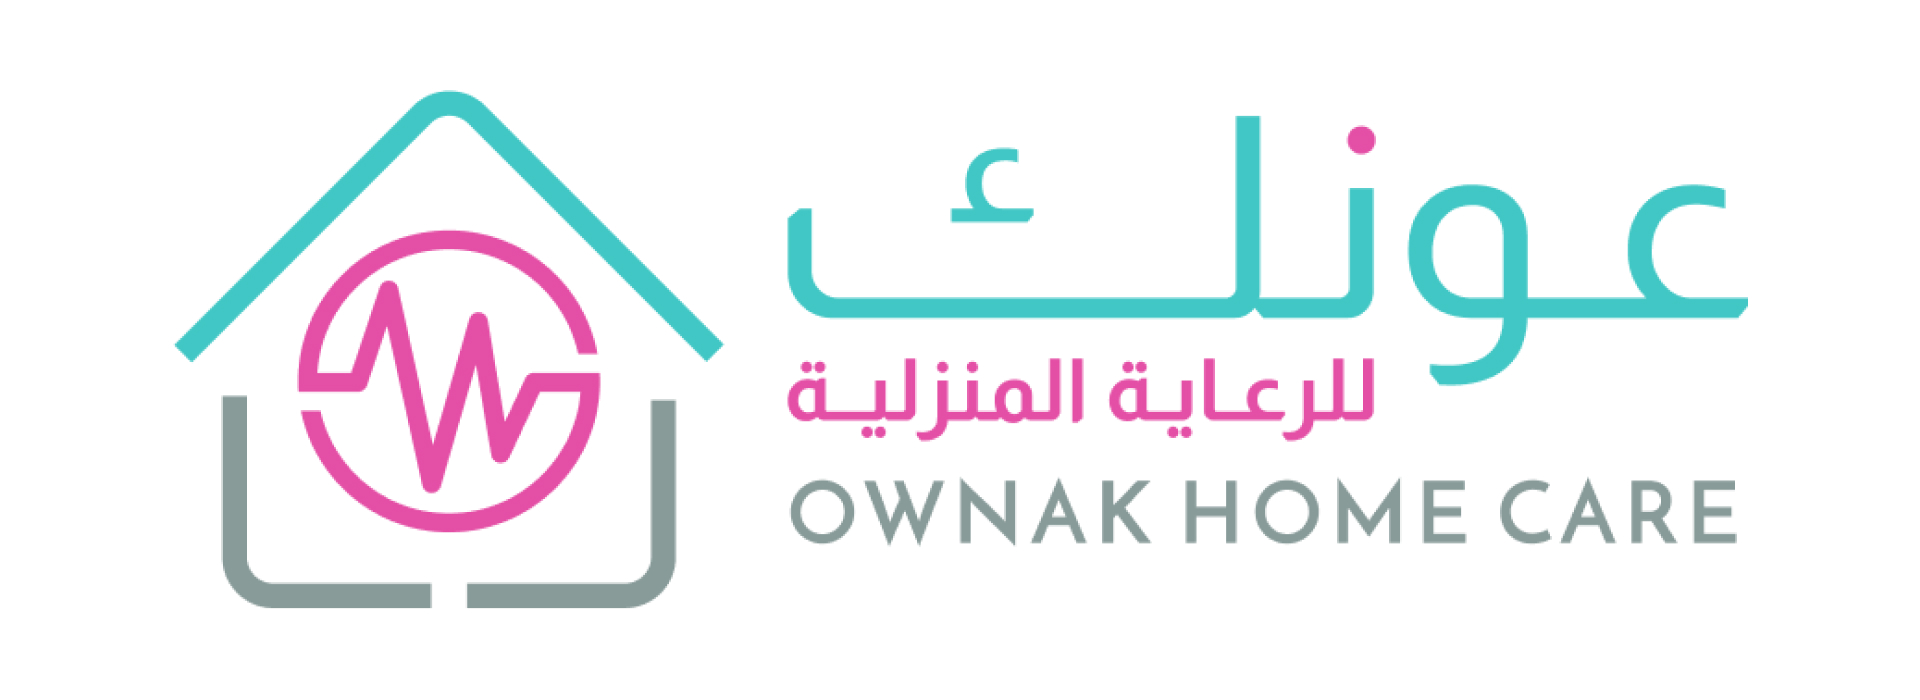 Ownak Home Care